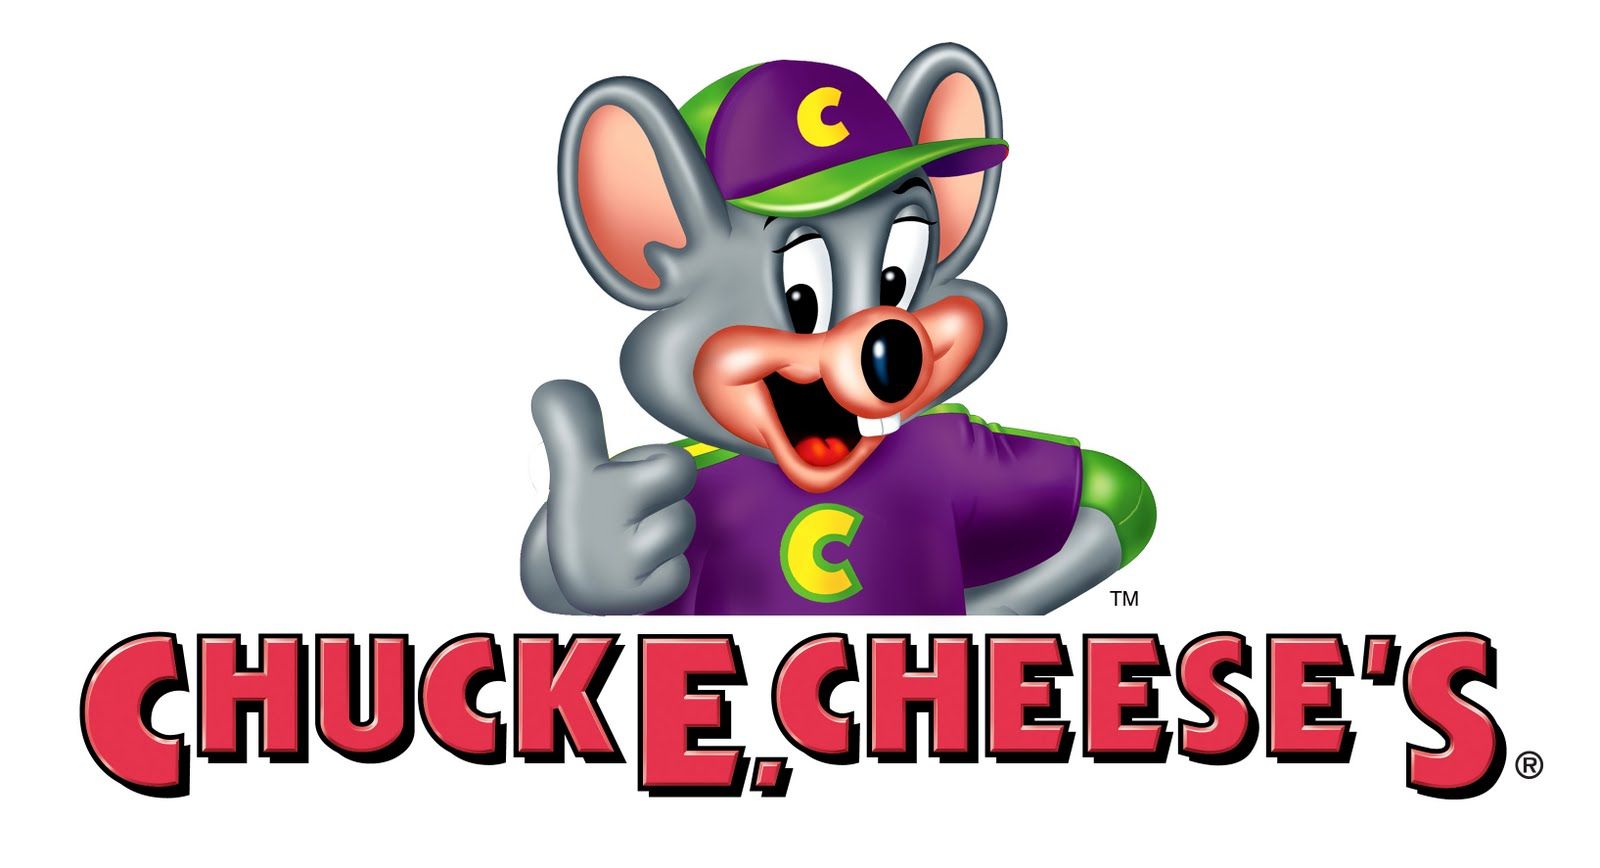 Free Download Celebrity Wallpaper: Chuck E Cheese